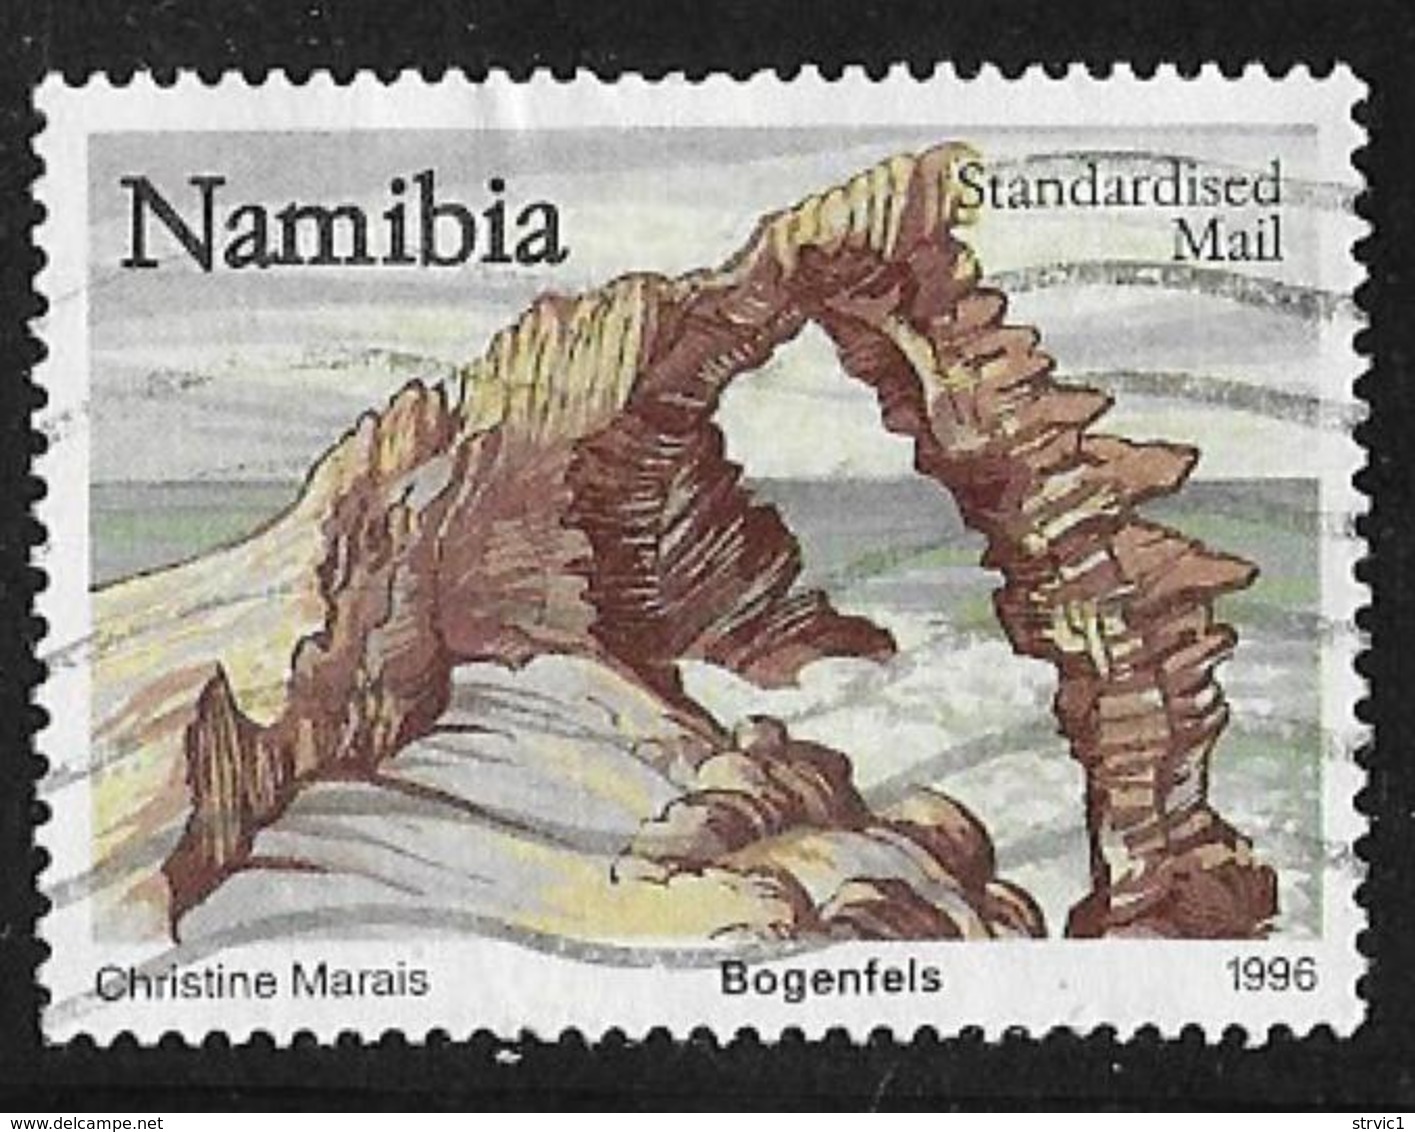 Namibia Scott # 793 Used Tourism, 1996 - Namibia (1990- ...)